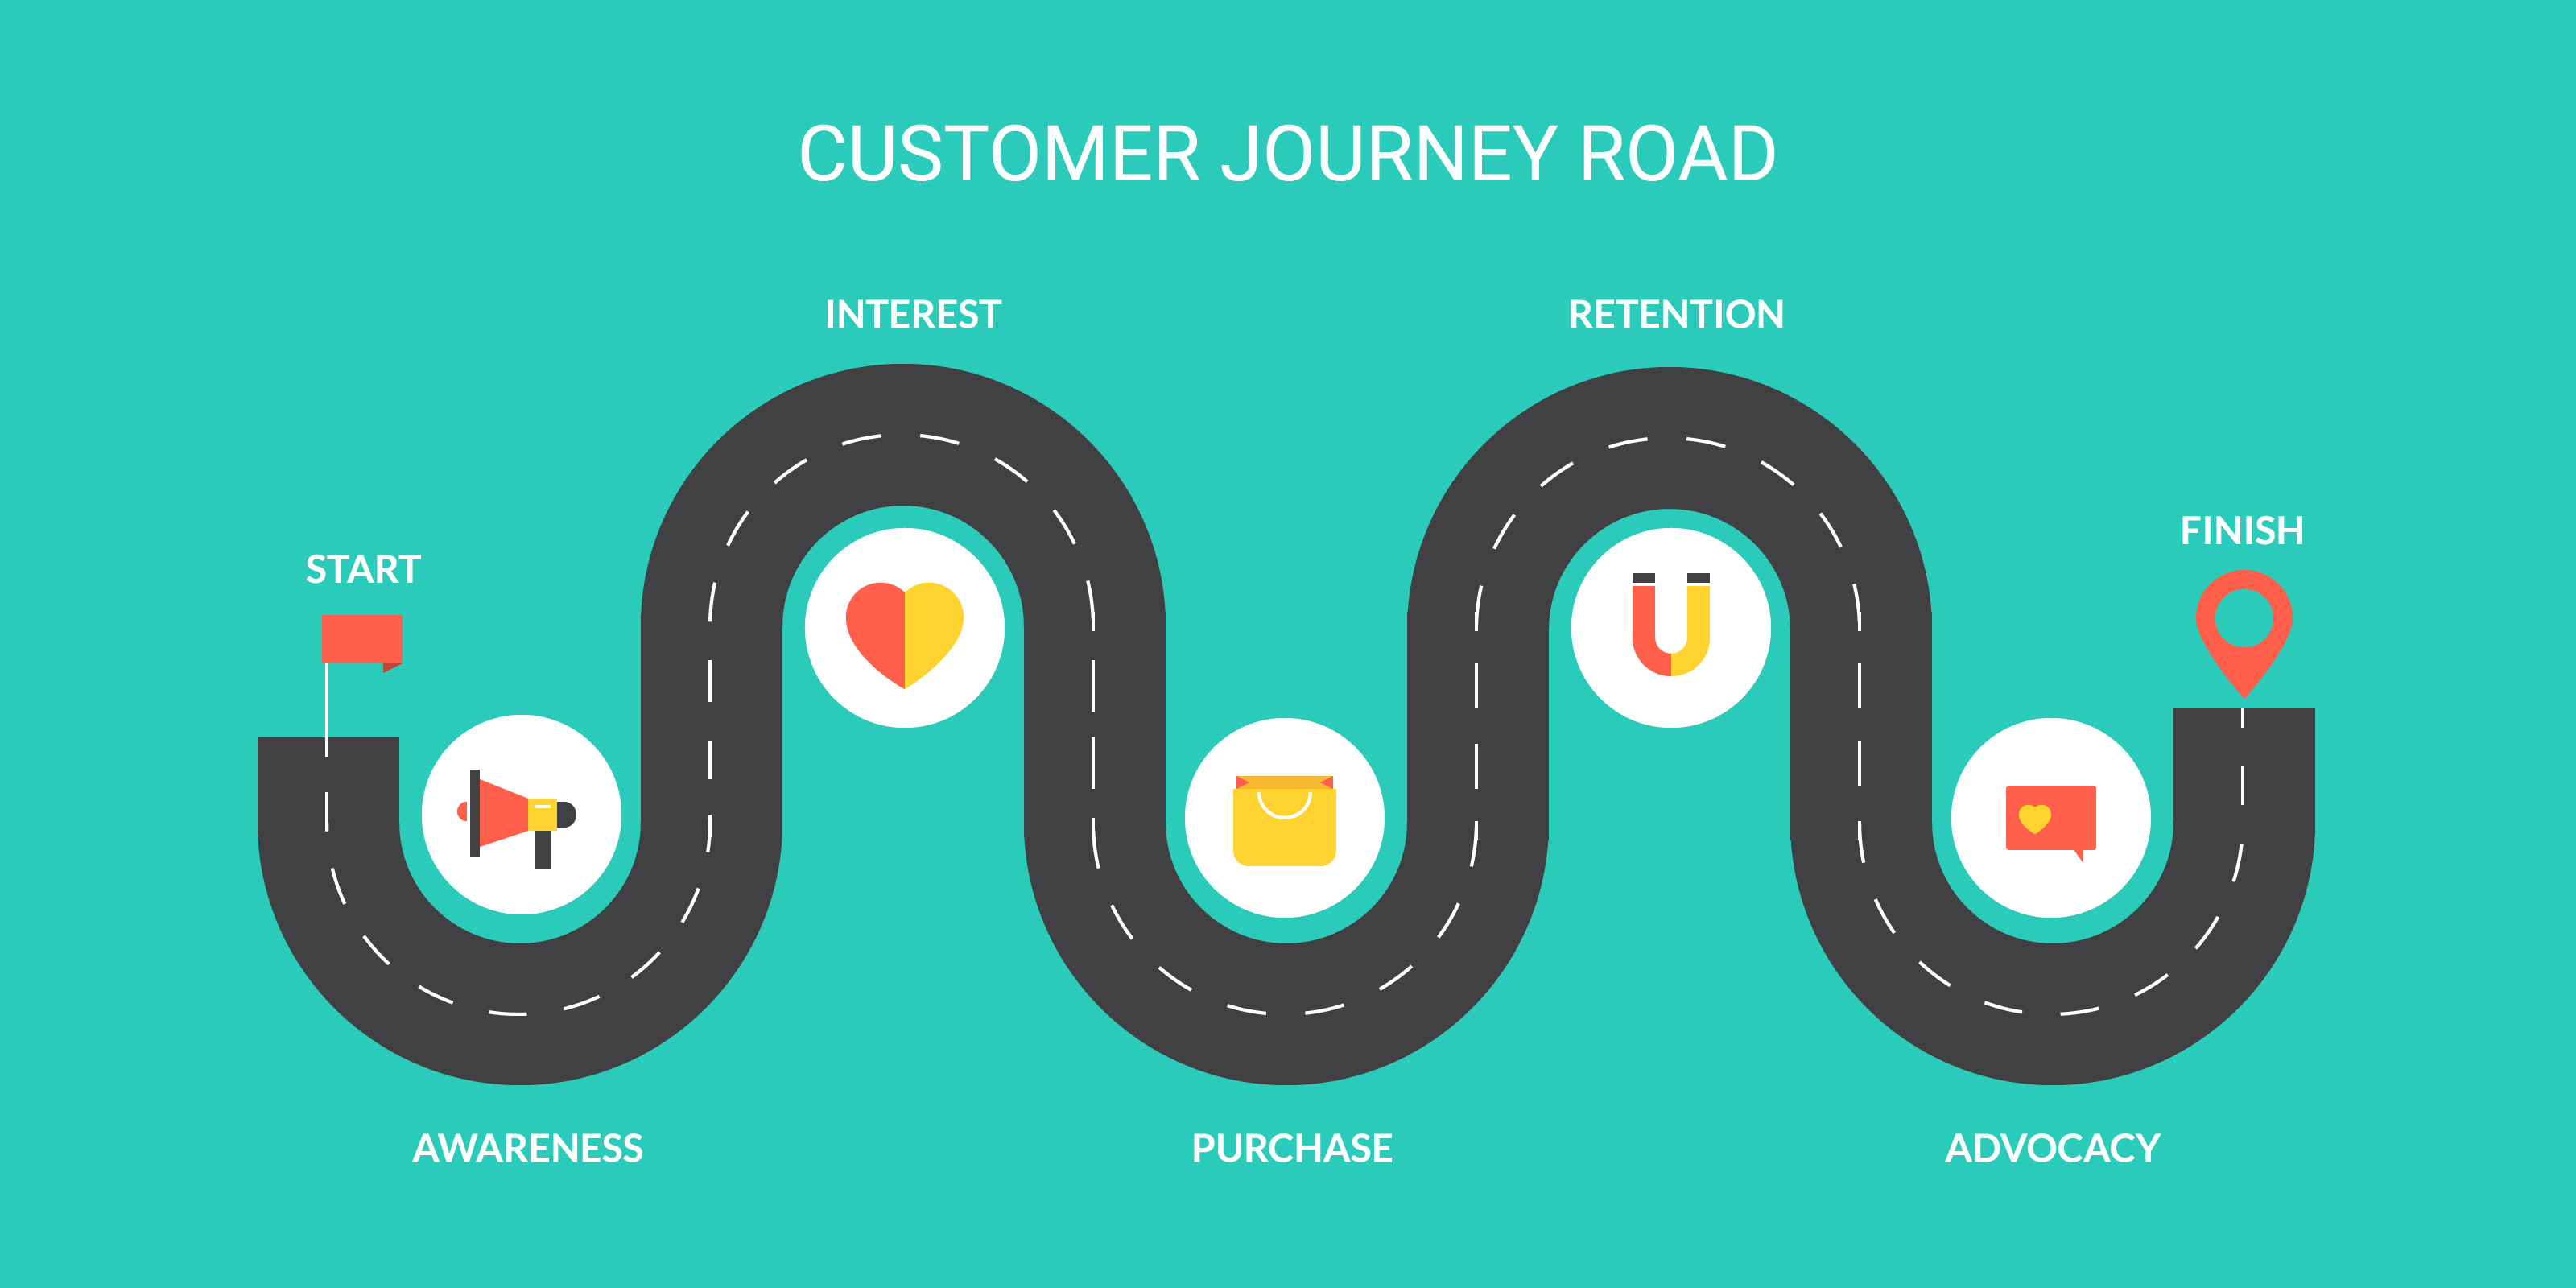 insider customer journey